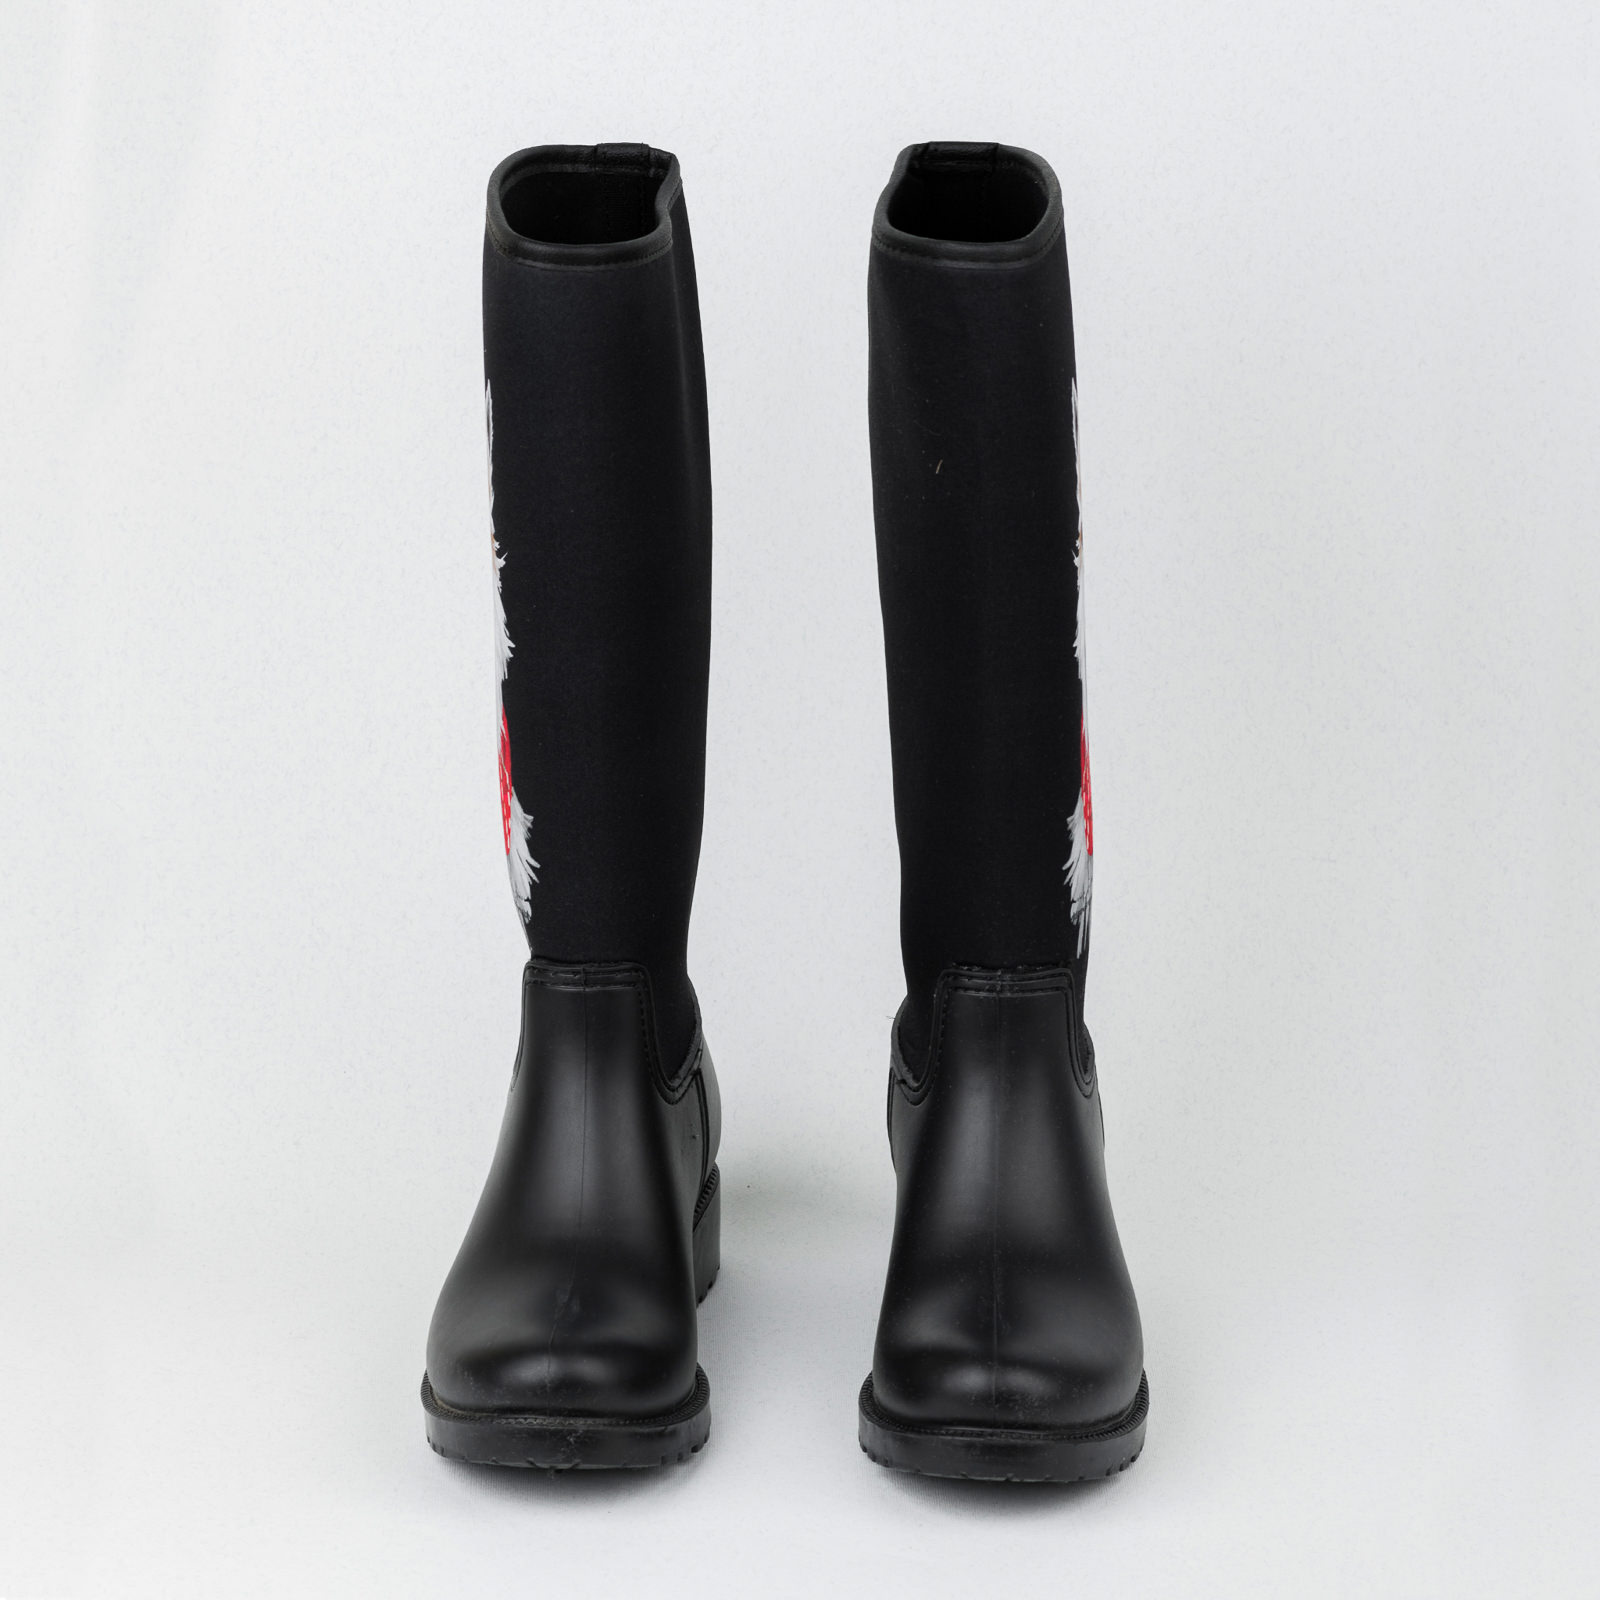 Waterproof boots B576 - BLACK